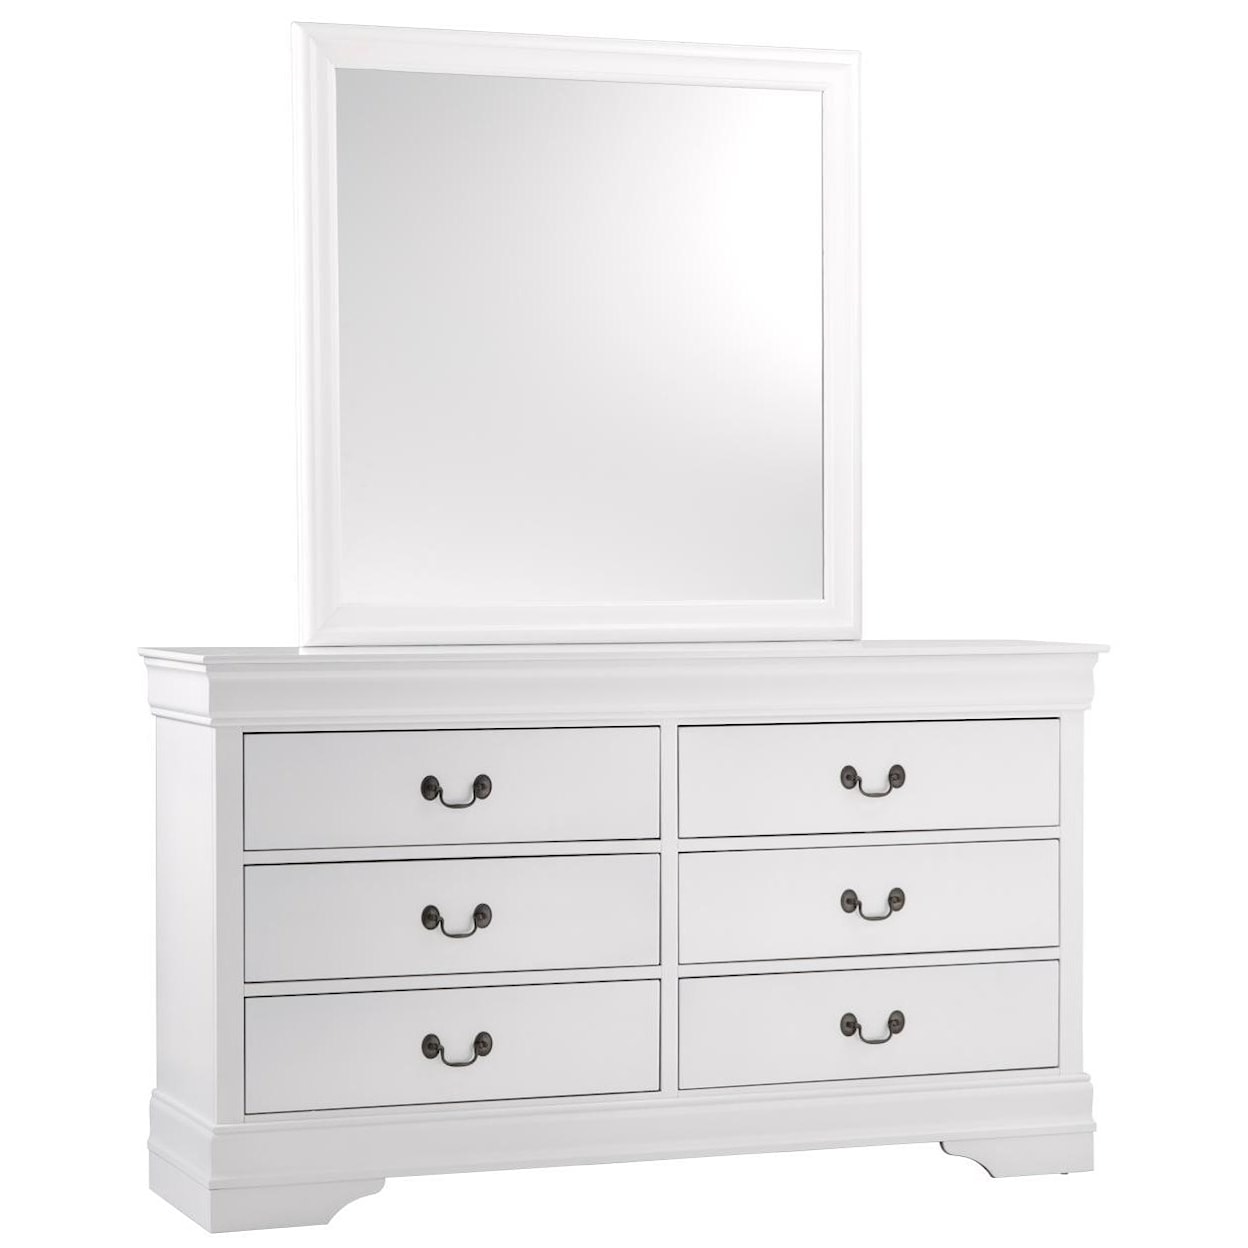 Homelegance Mayville Dresser and Mirror Set